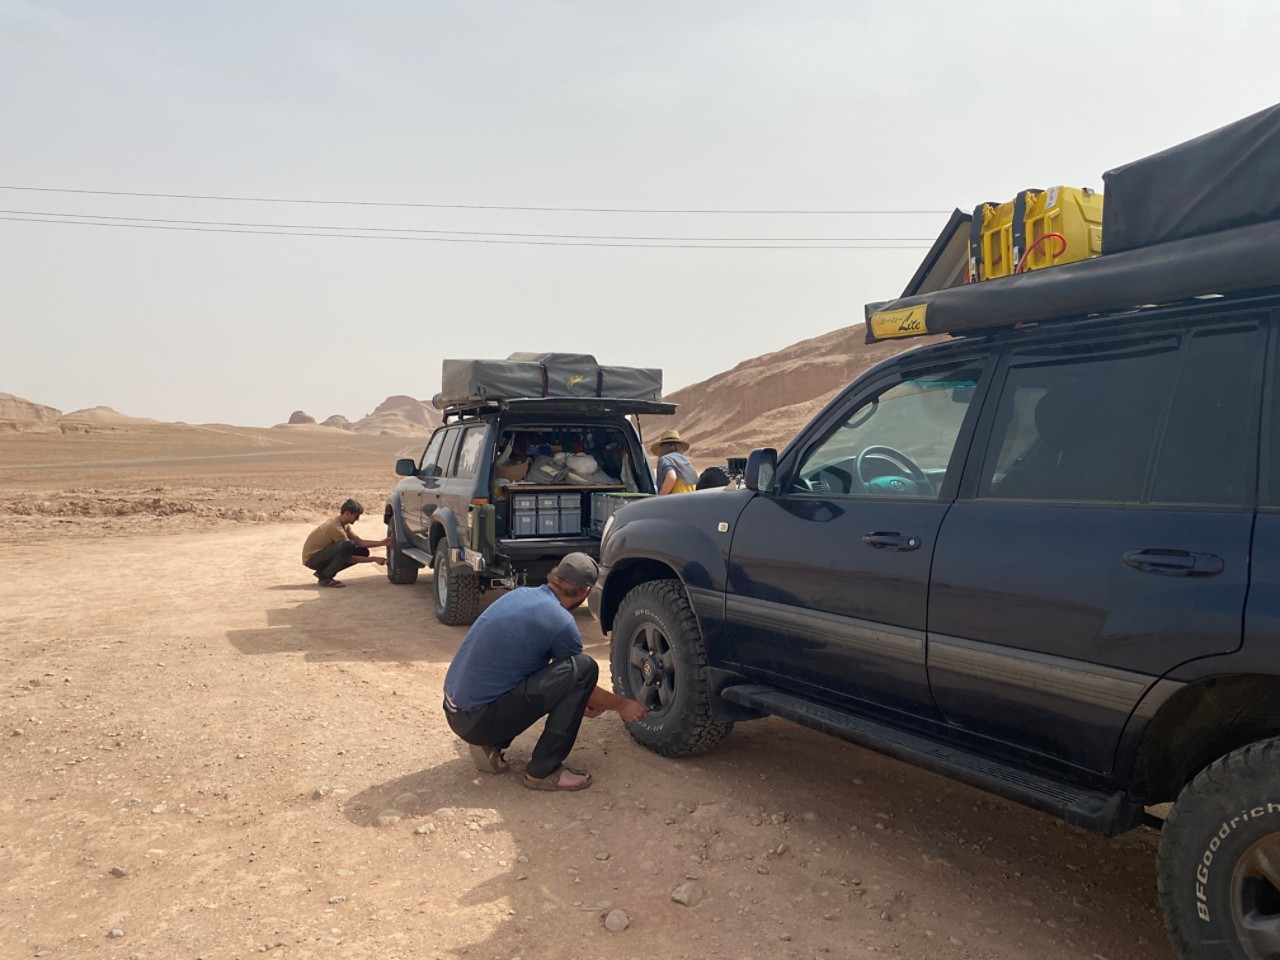 Toyota, Land Cruiser, woestijn, Iran, bandenspanning